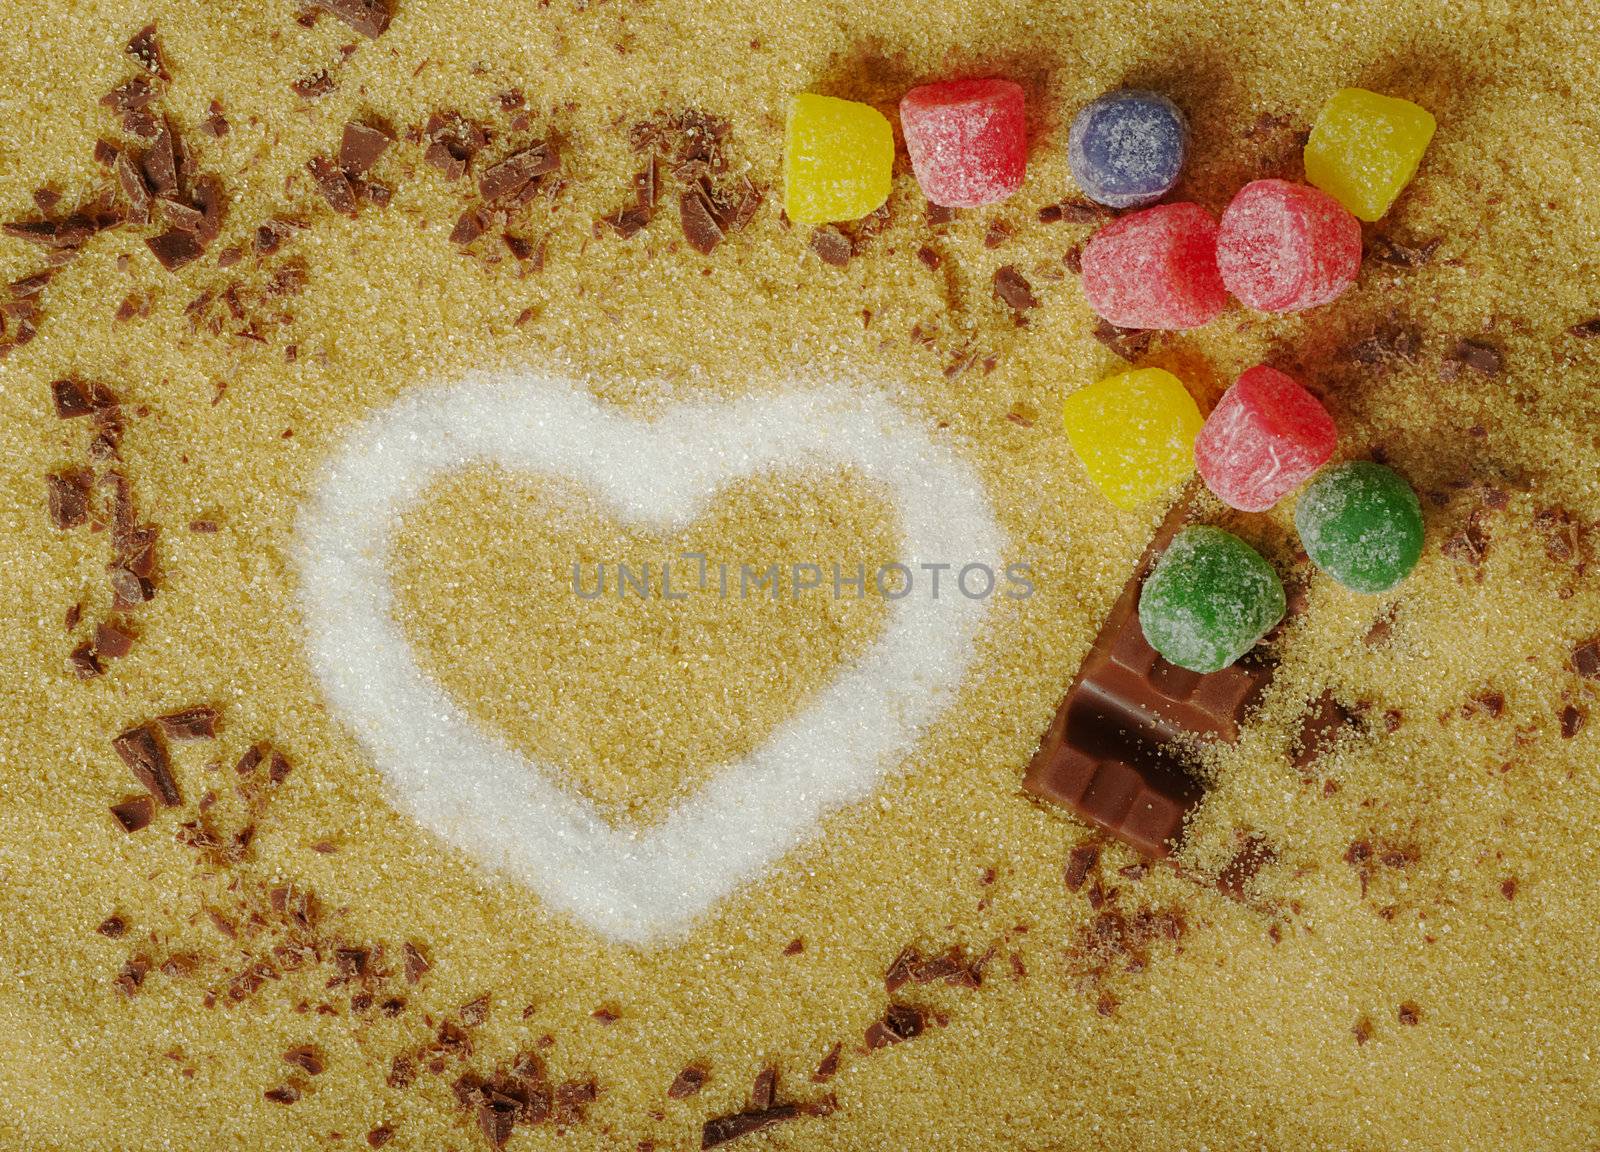 White Sugar in Heart Shape on Brown Sugar with Chocolate Bar